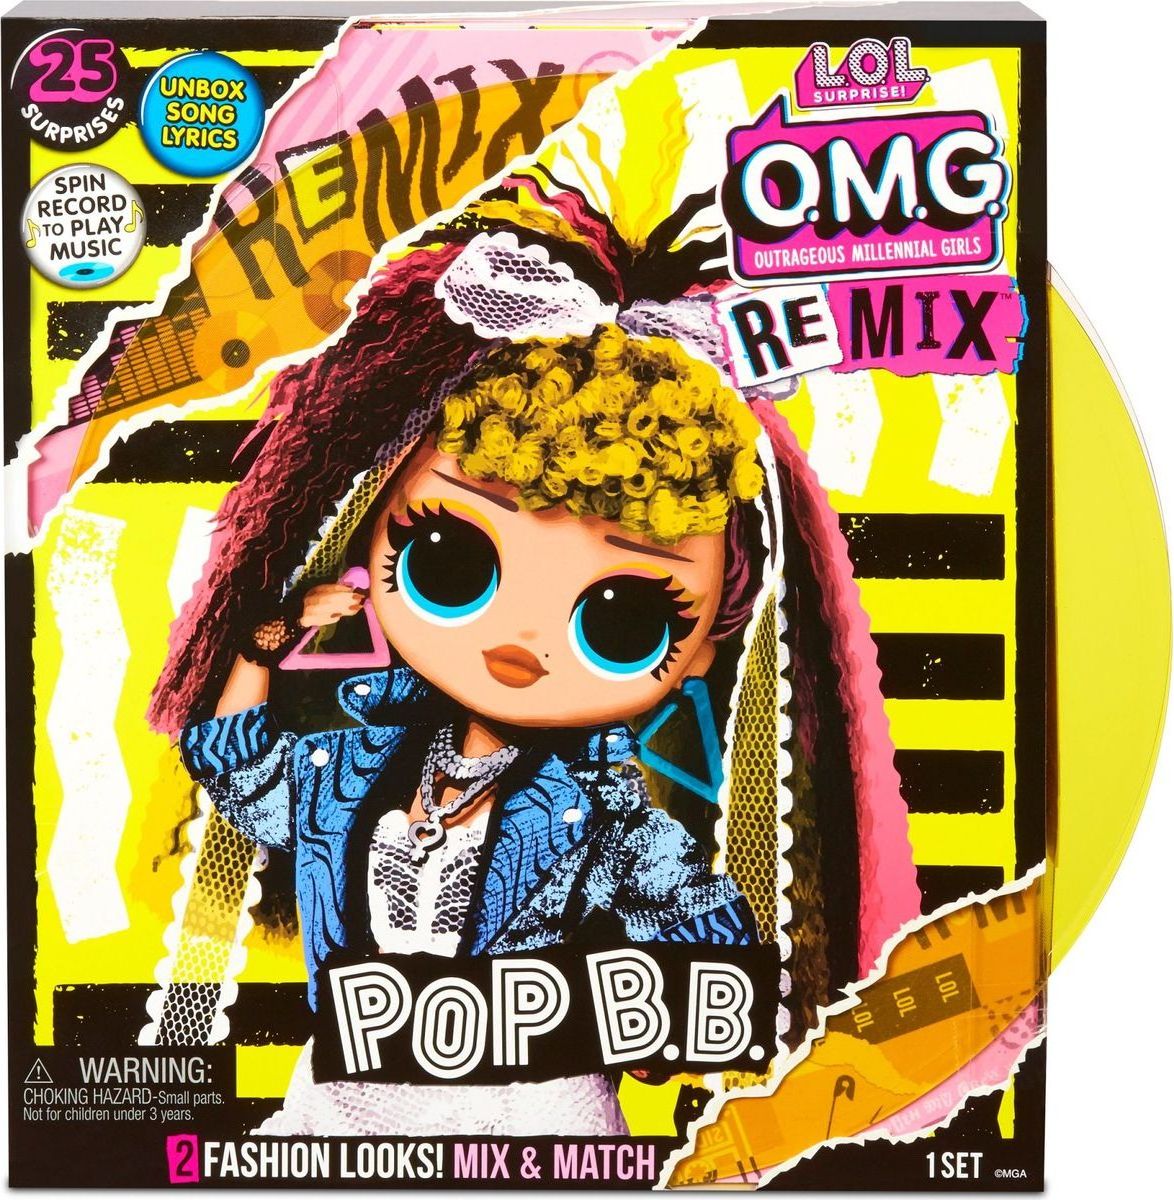 L.O.L. Surprise Velká ségra OMG Remix Doll Pop B.B - obrázek 1